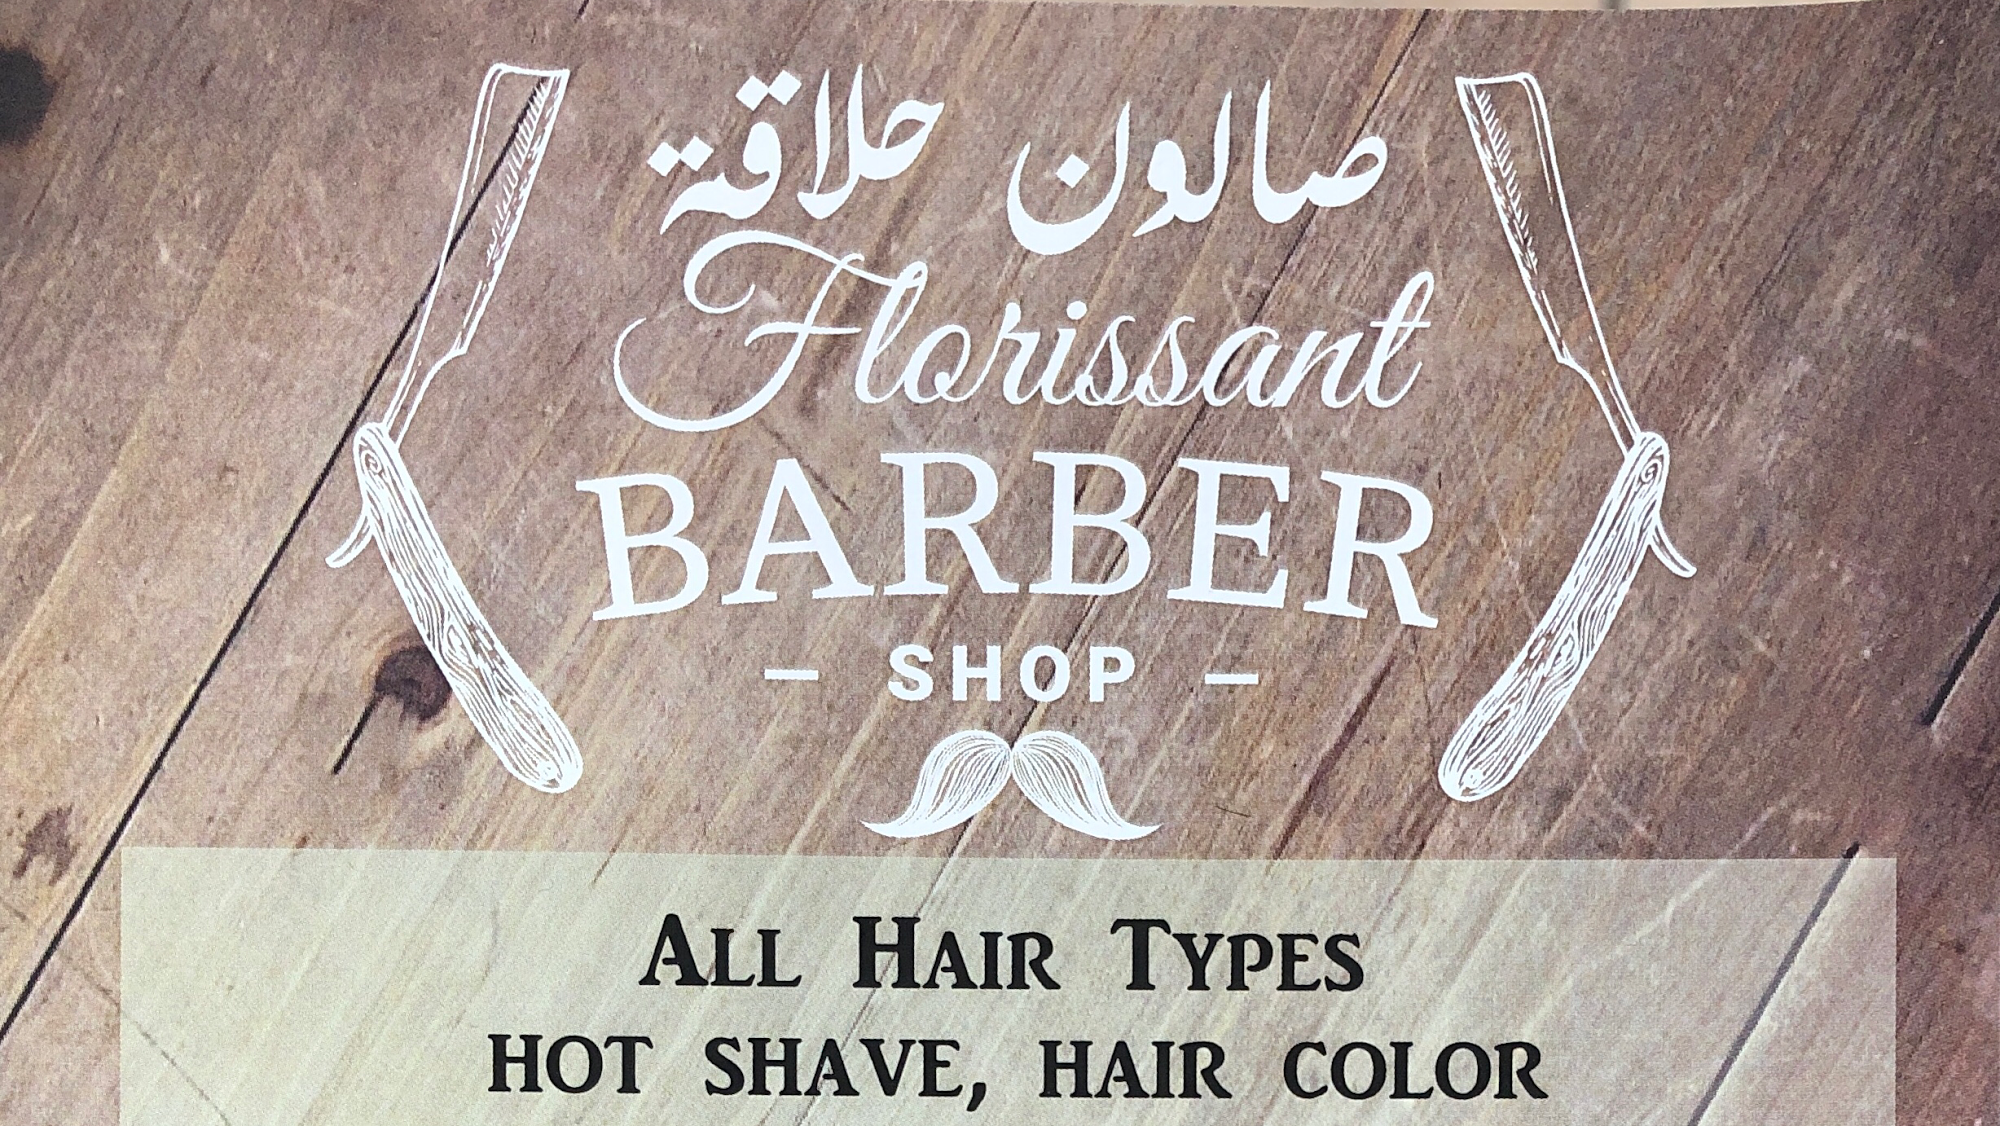 Florissant Barber Shop